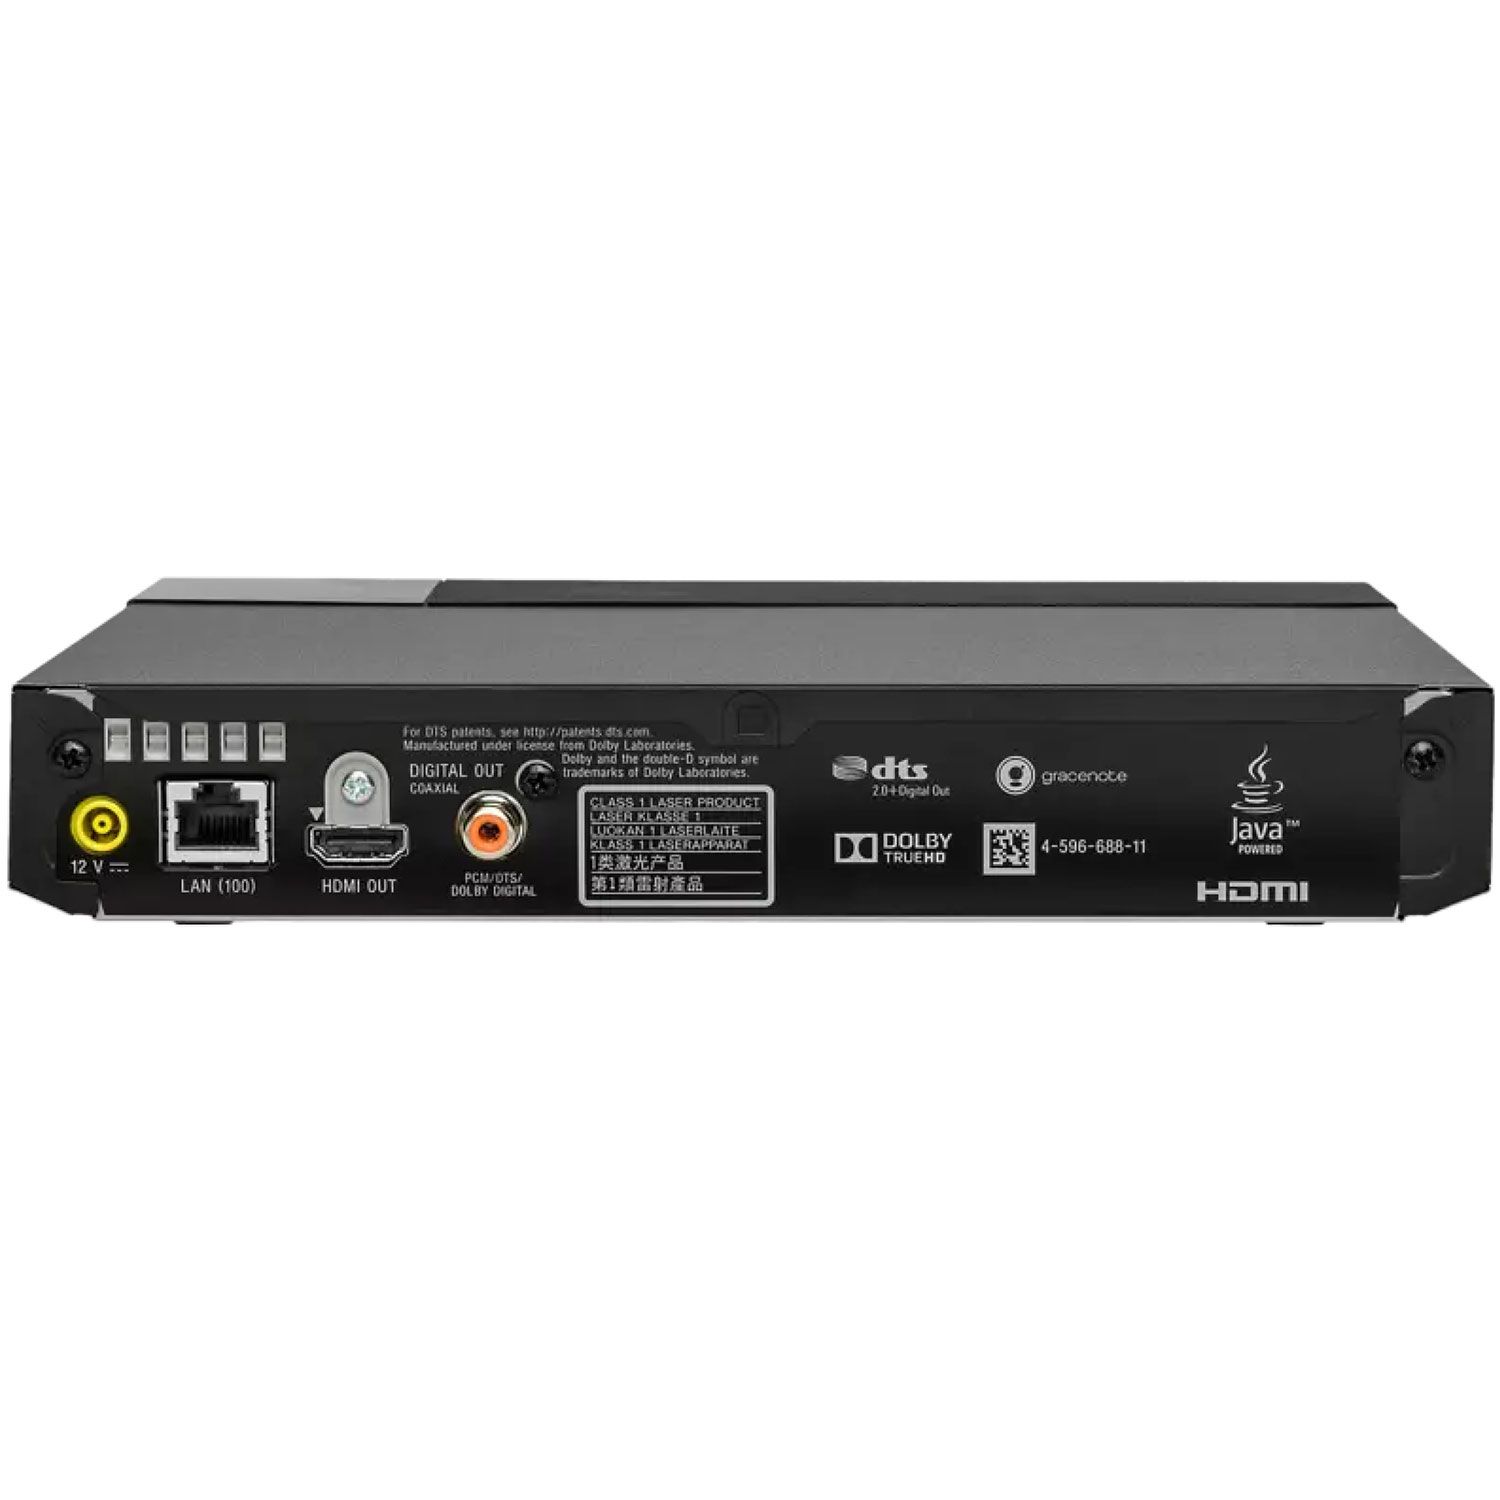 Smart - & BDPS3700B HBH | Local - Sony Woolacotts Player Devon\'s Black Blu-ray Cornwall Electrical Retailer